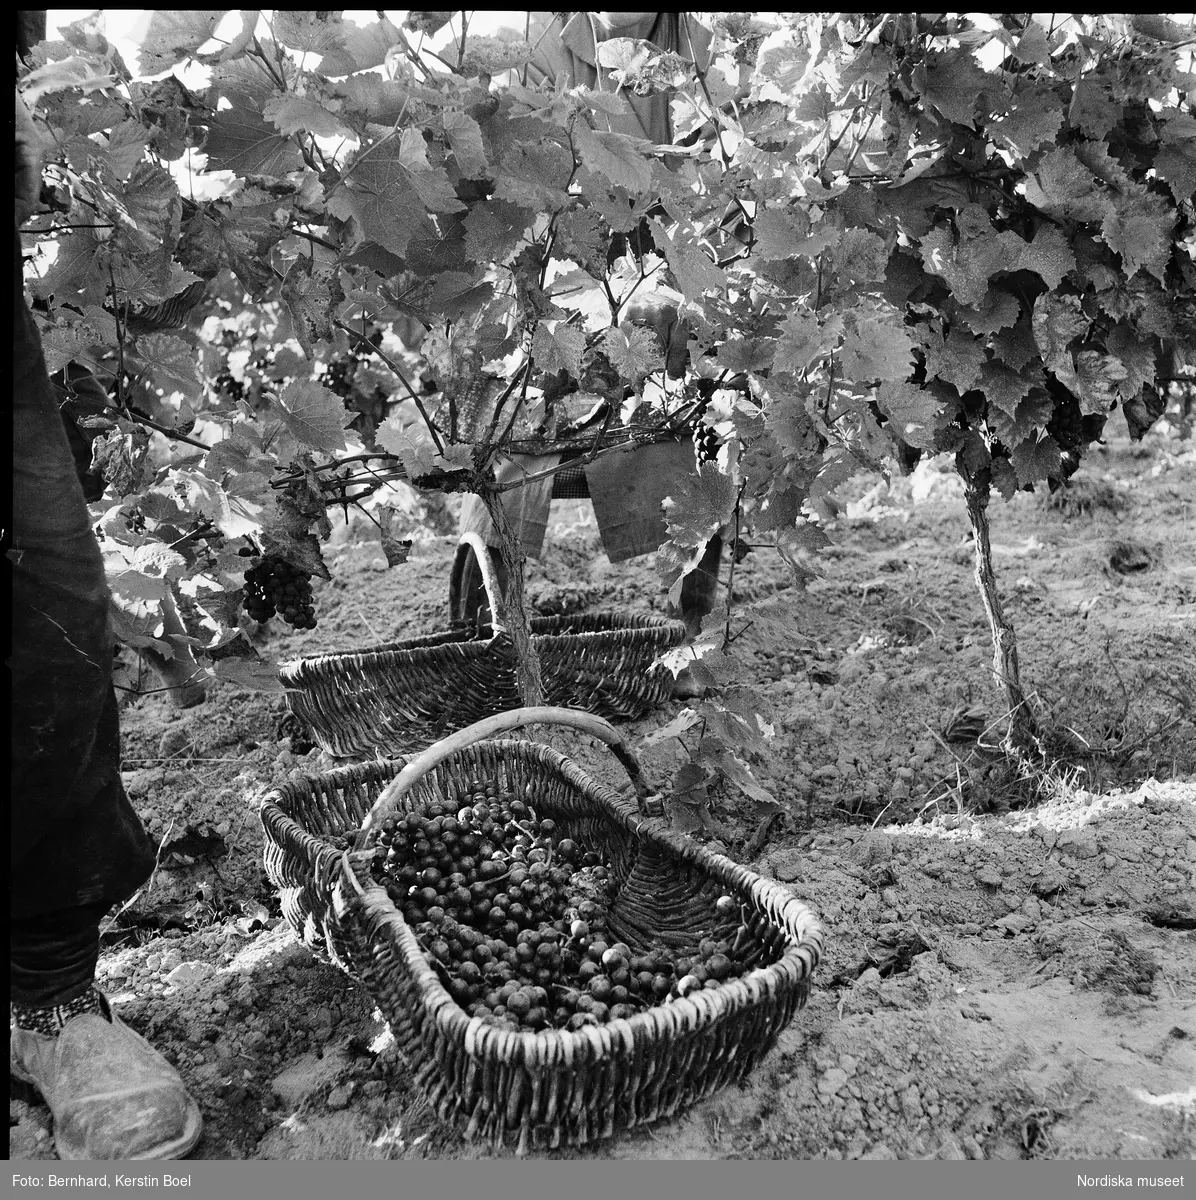 Frankrike, Loire-dalen, Muscadet.
Arbetet i vingården, korgar med vindruvor.